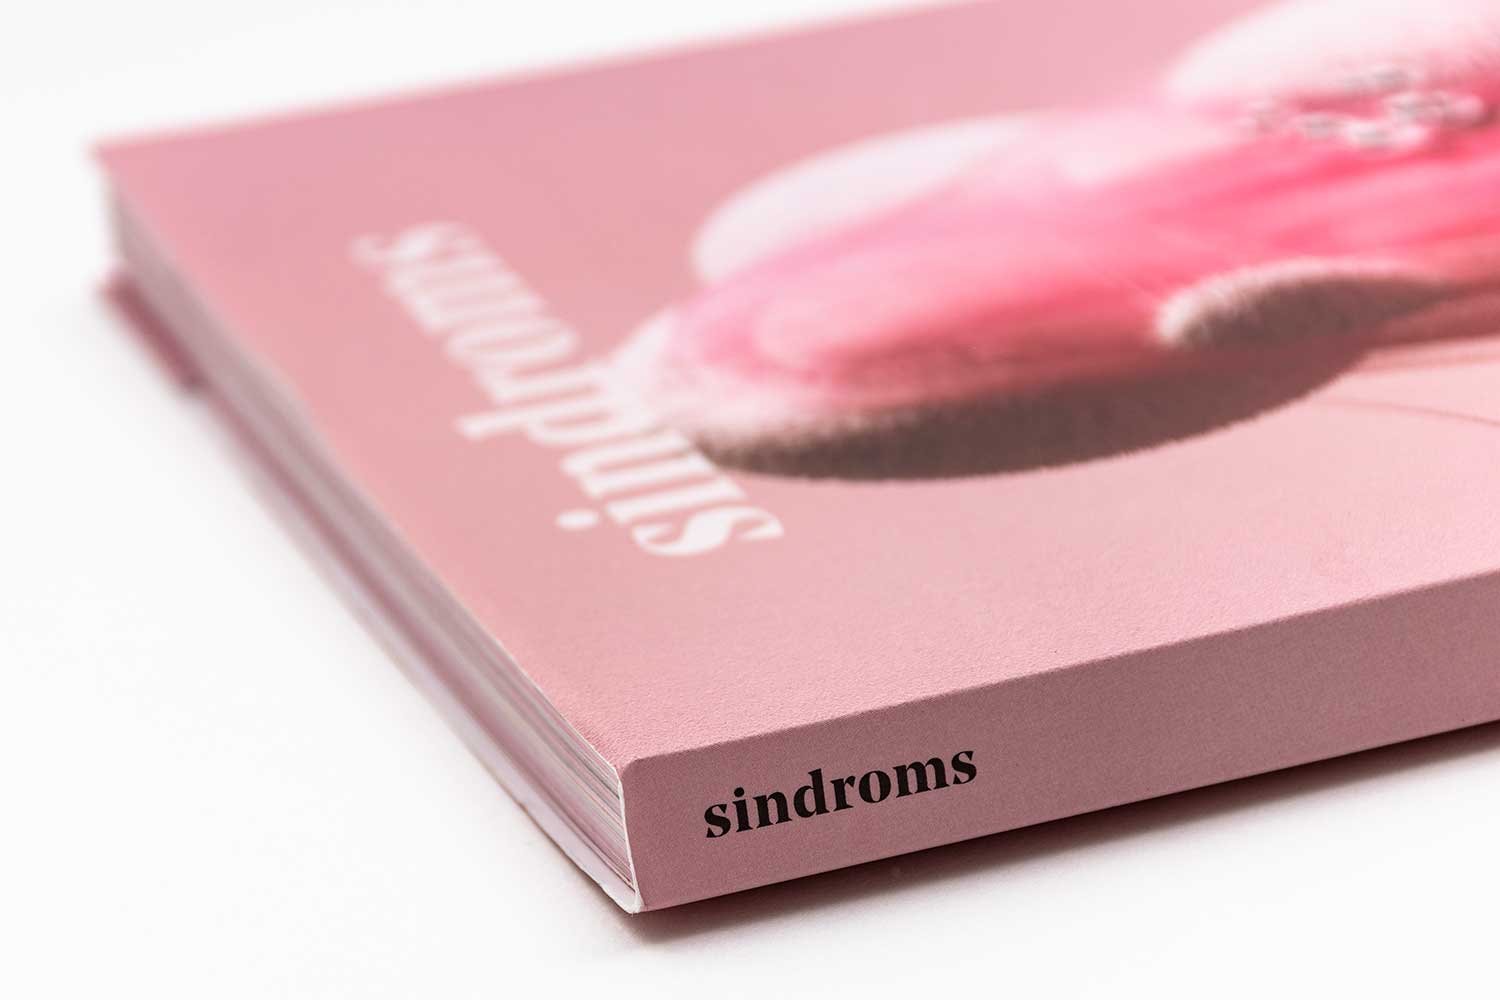 Revista "Sindroms" Pink detalle de portada